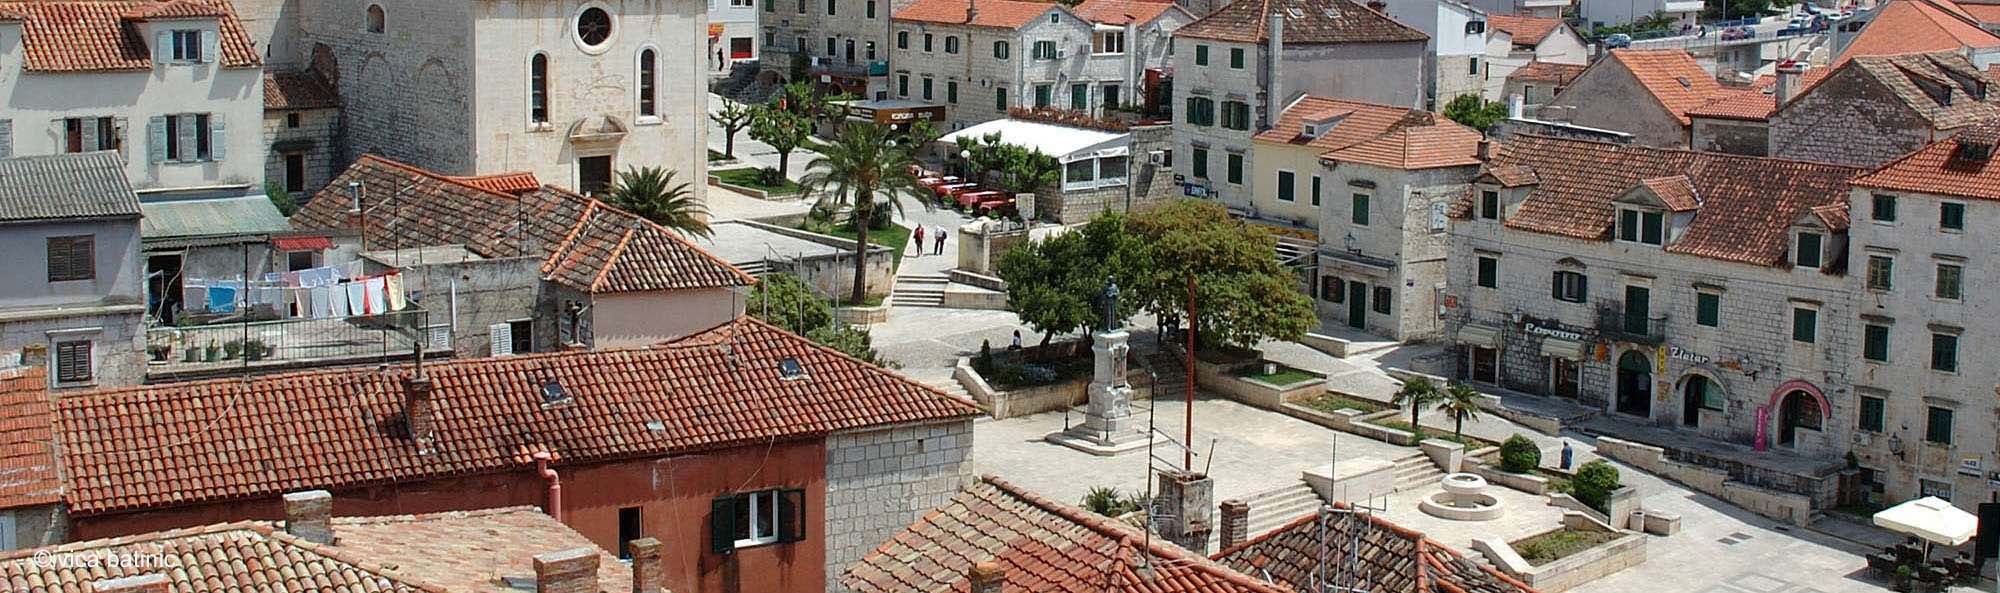 Kacic Square, Makarska, Dalmatia, Croatia